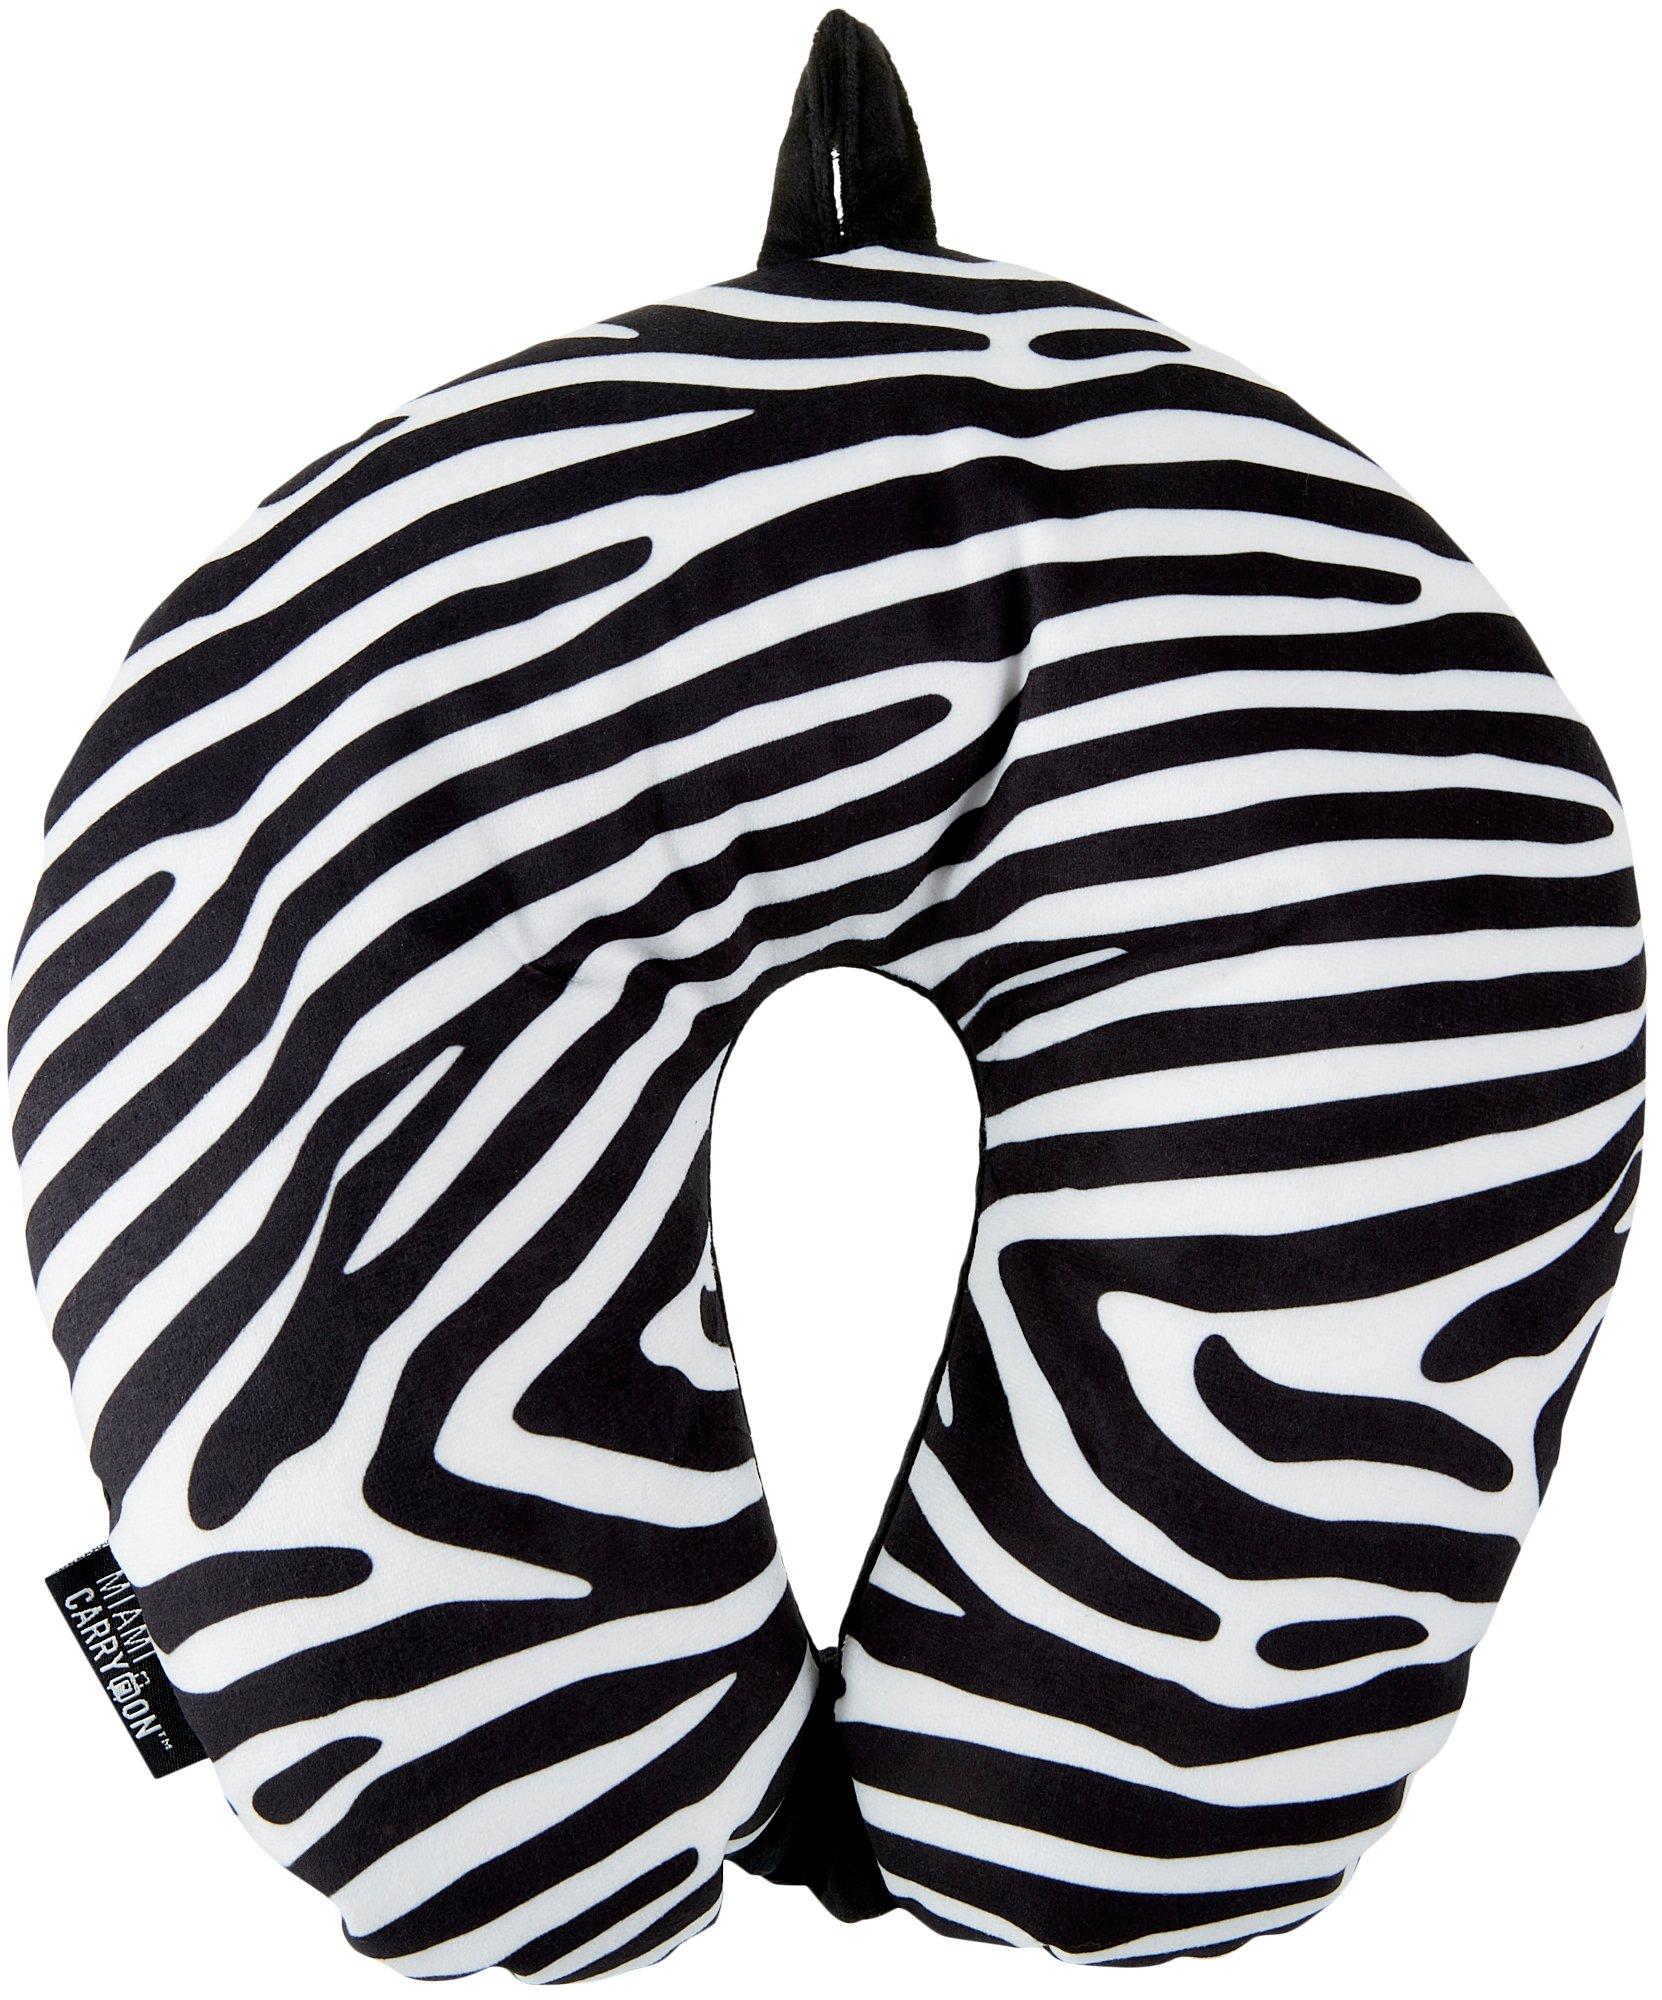 Zebra Travel Neck Pillow